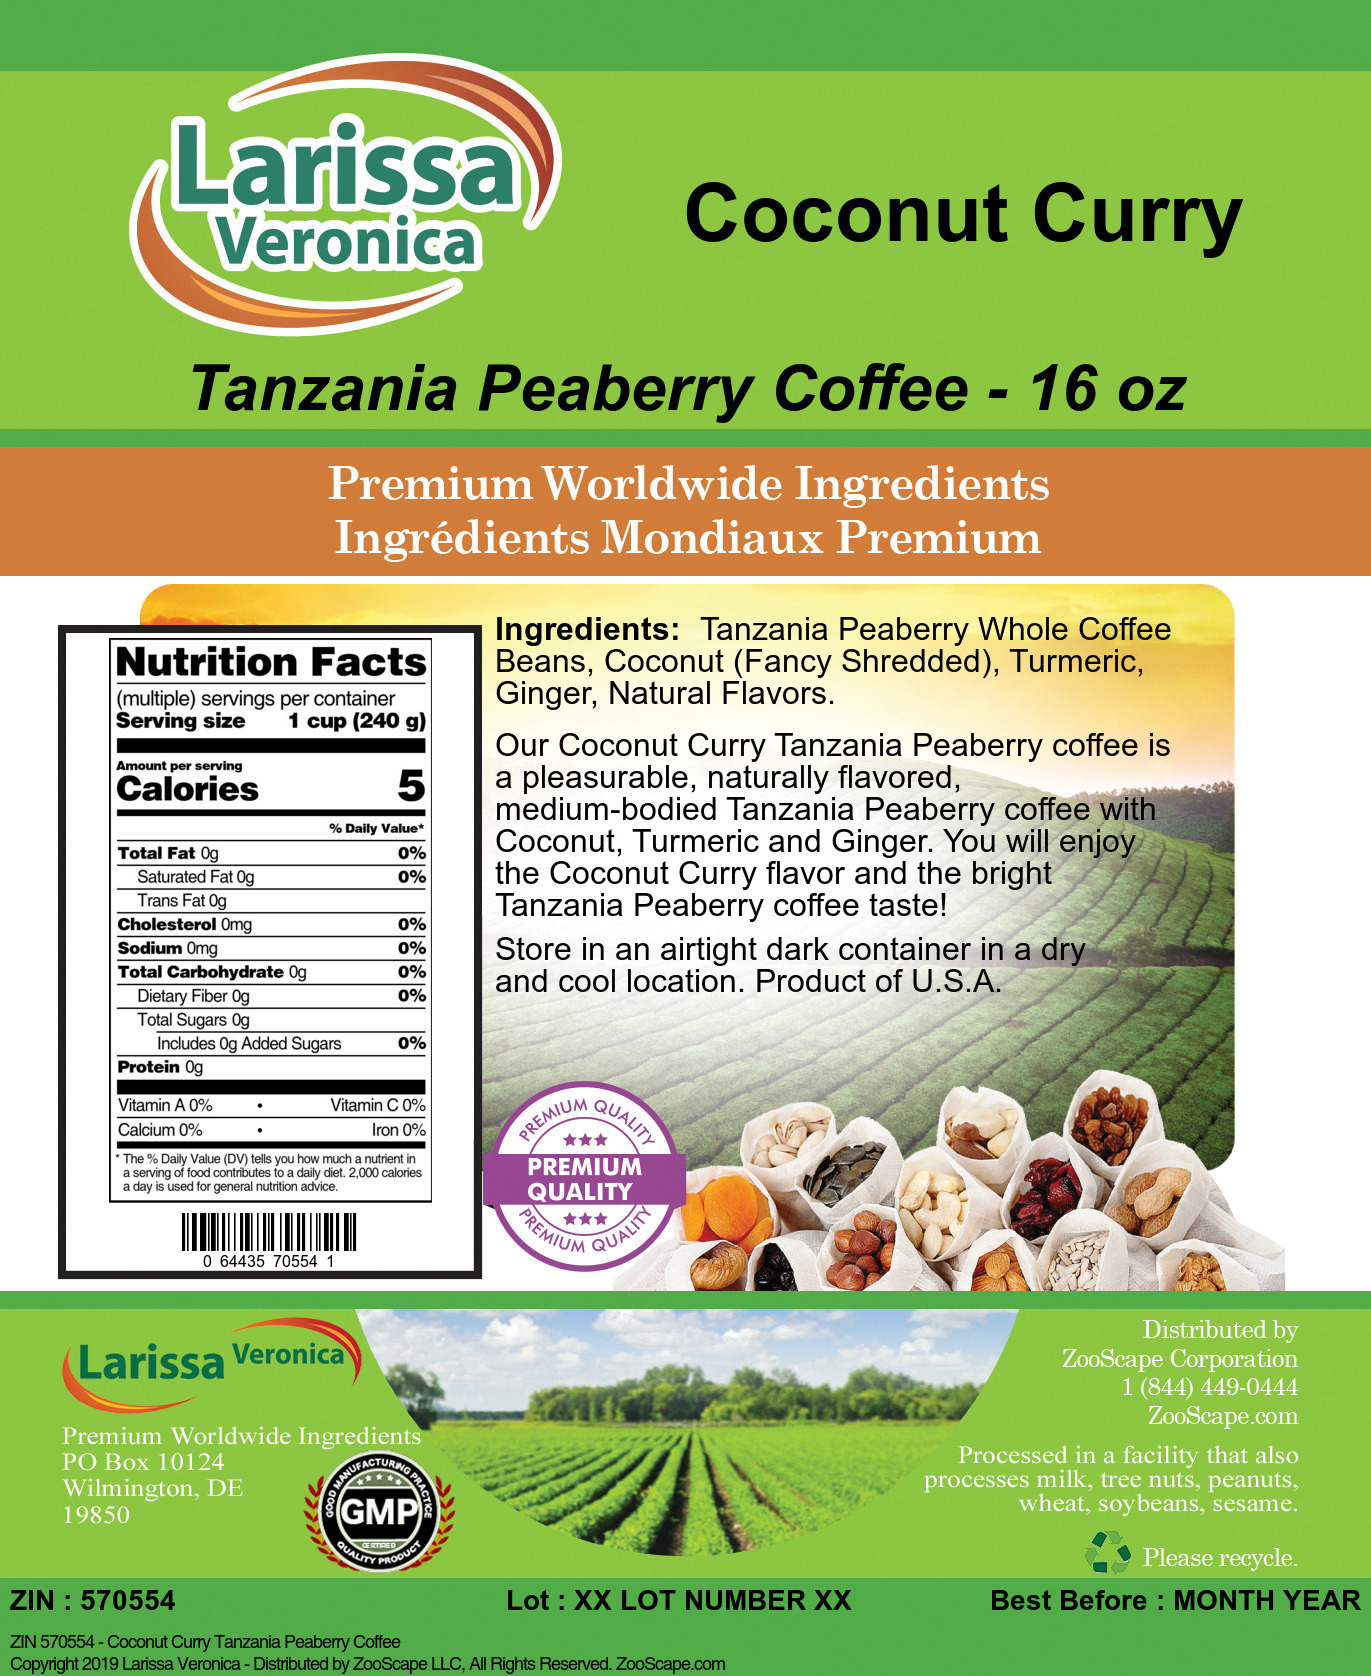 Coconut Curry Tanzania Peaberry Coffee - Label